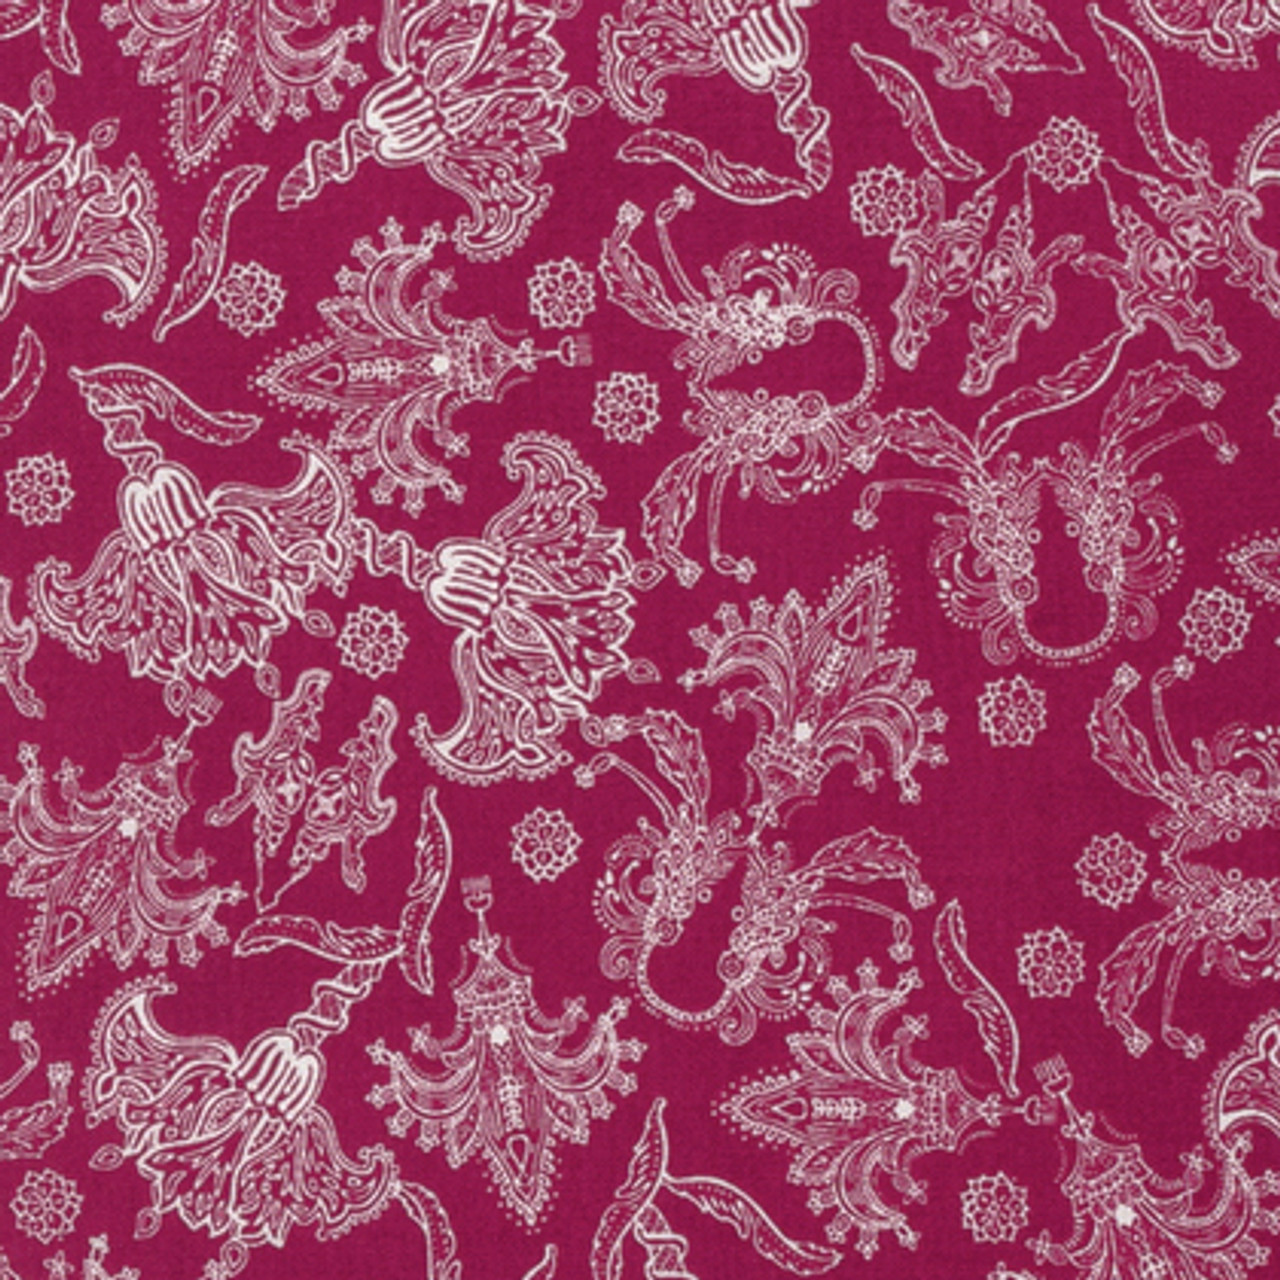 Studio KM PWKM025 Persia Persian Botanicals Ruby Cotton Fabric By The Yard